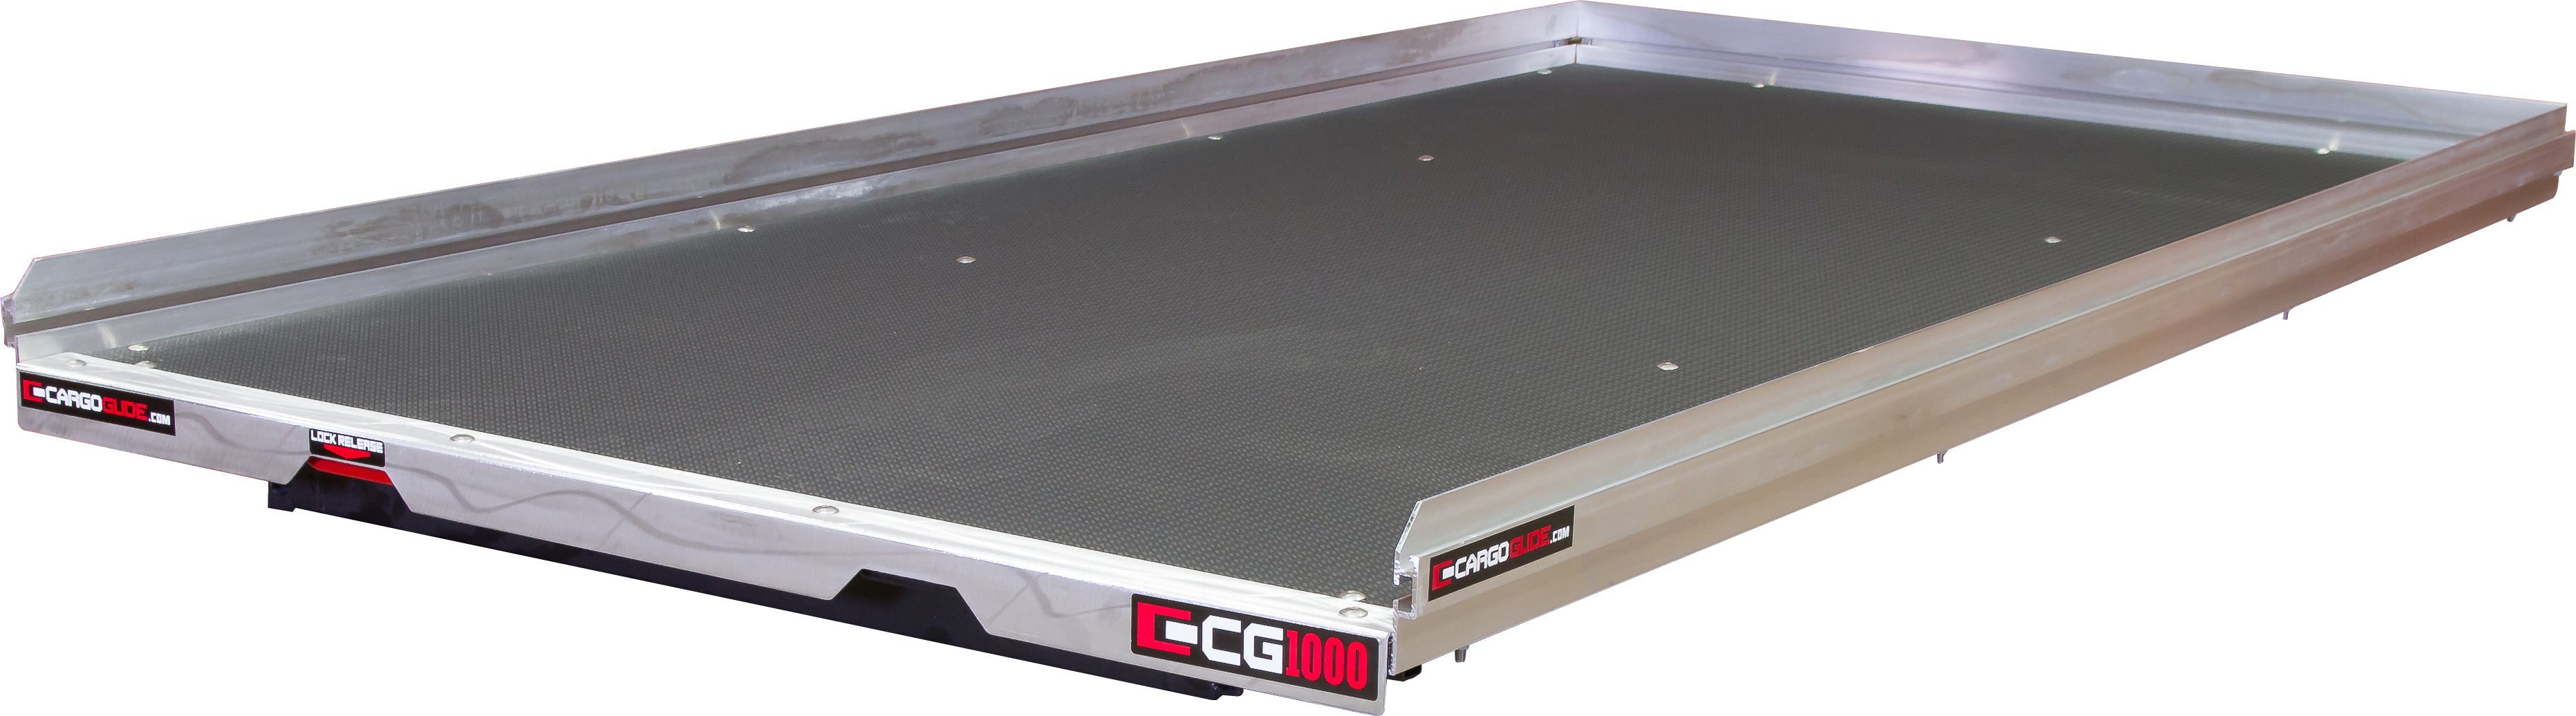 CargoGlide CG1000-6348, Slide Out Cargo Tray - 1000 lb capacity.